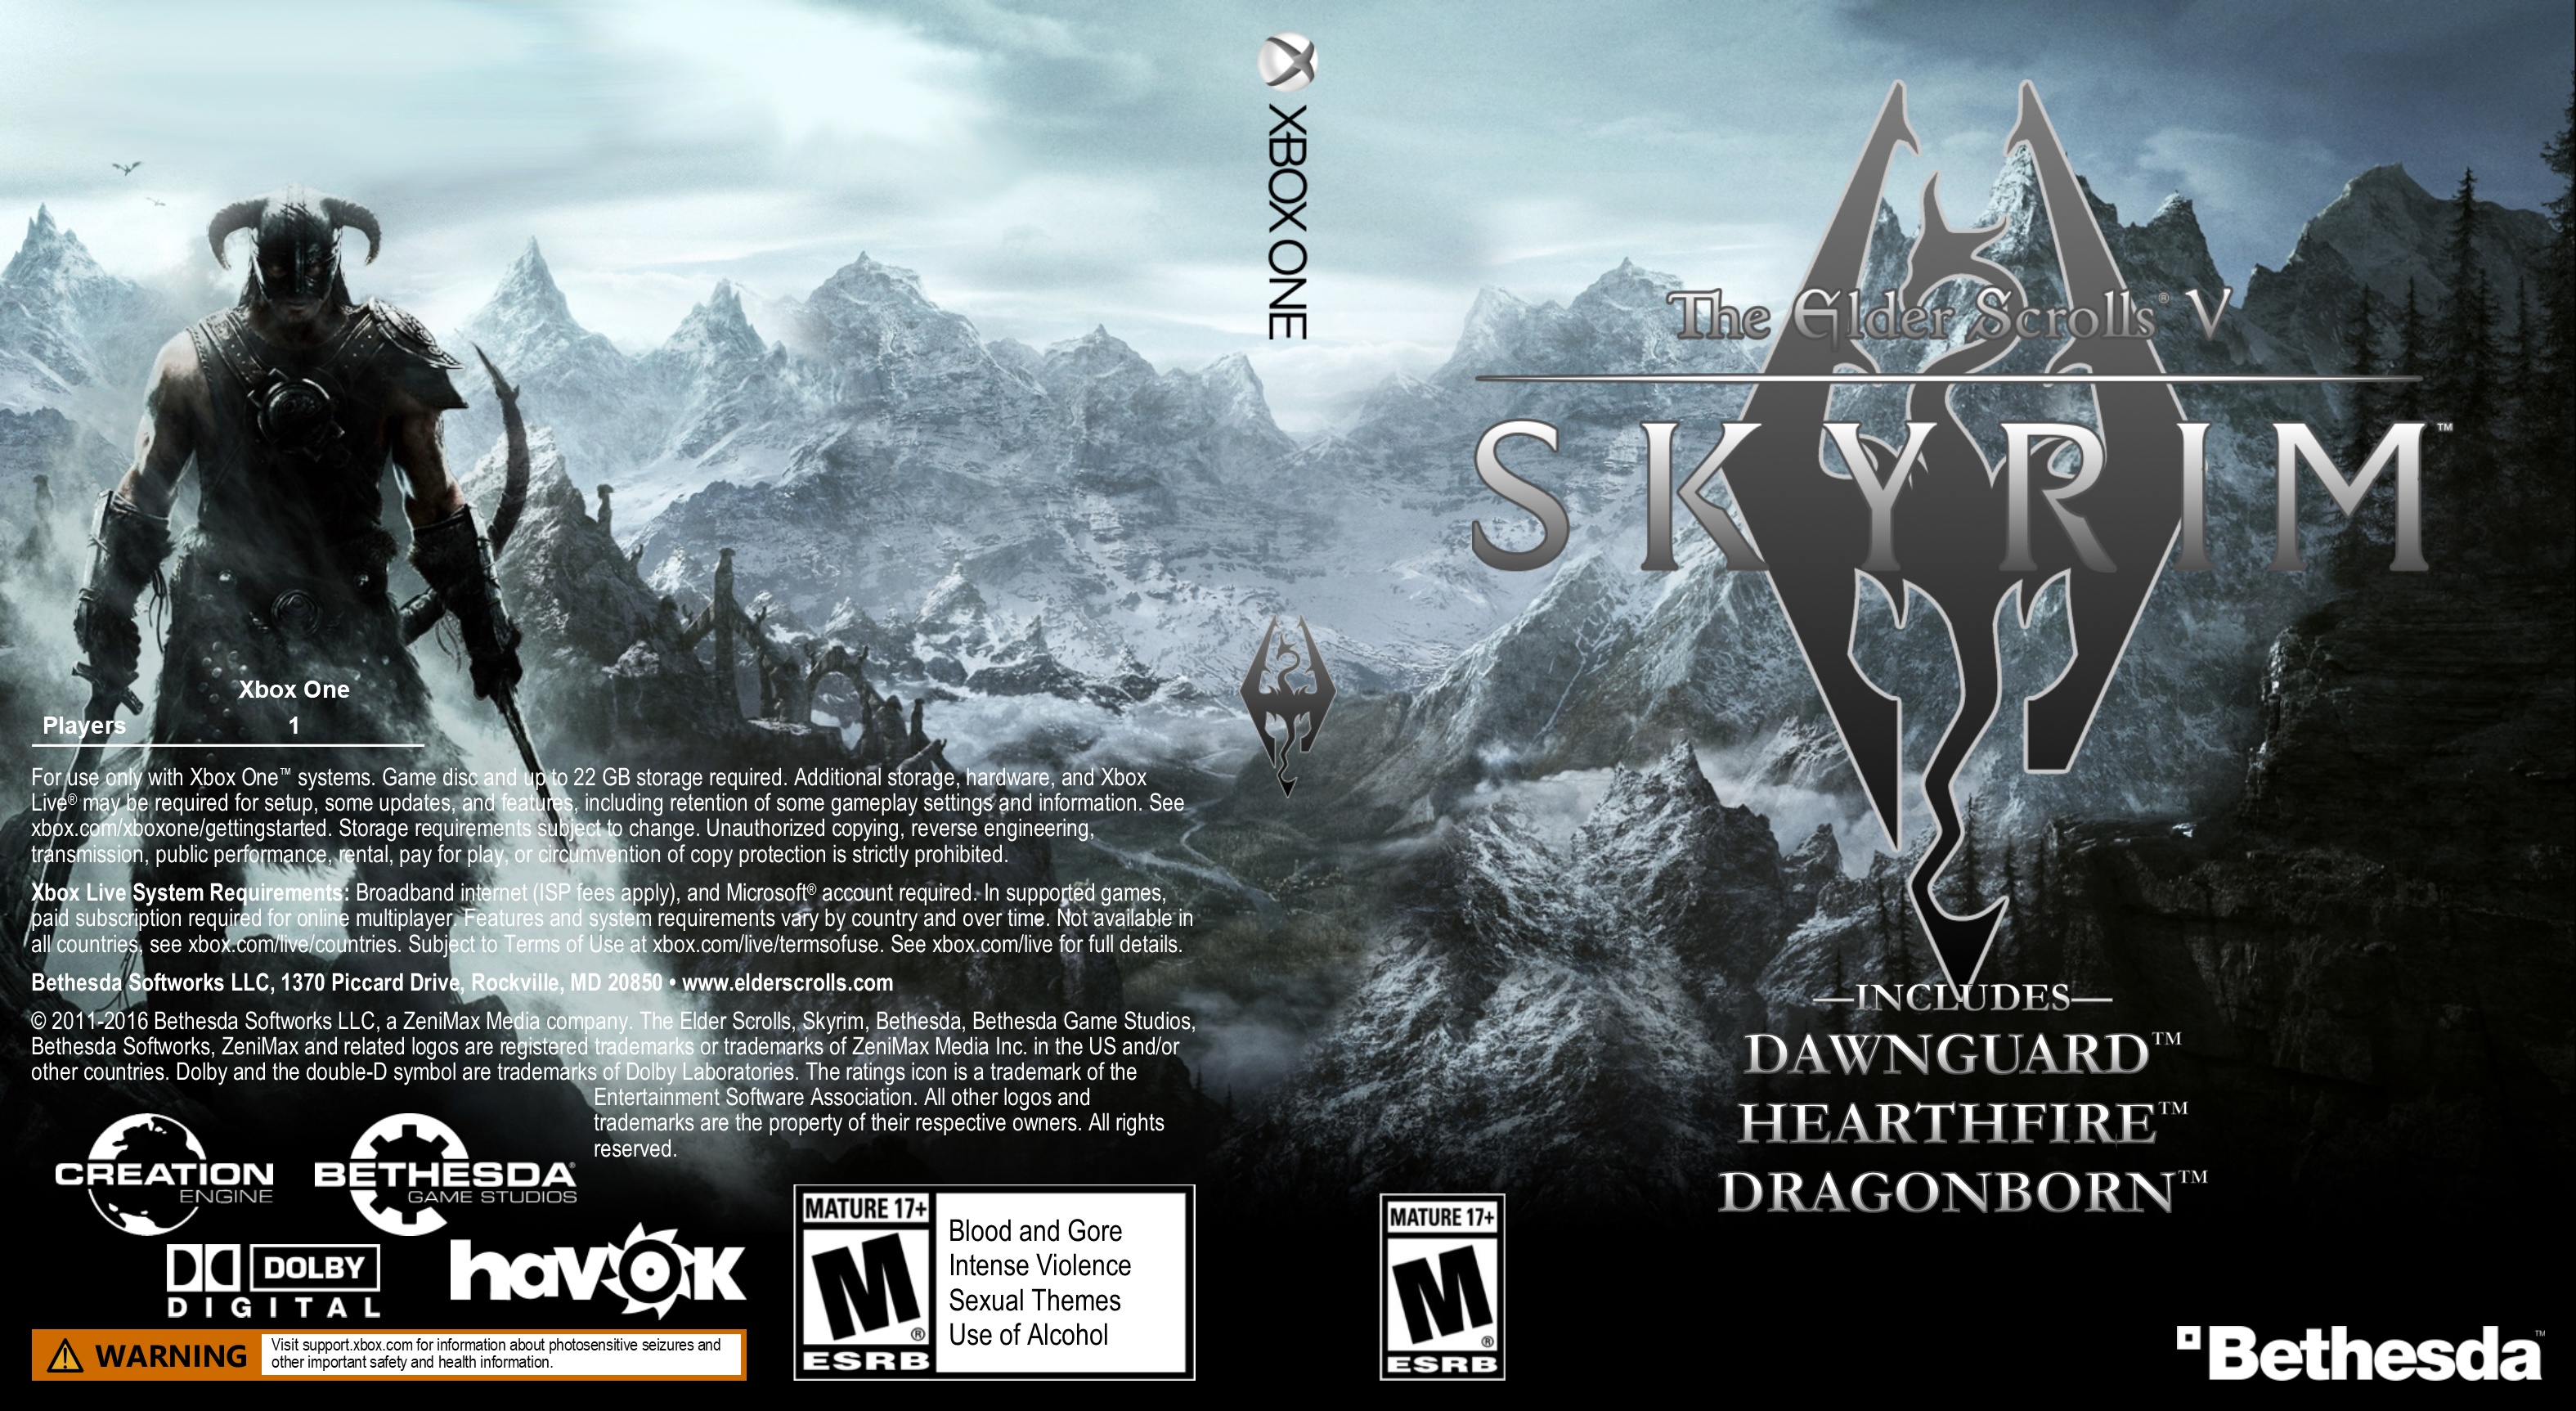 instal the new version for ios The Elder Scrolls V: Skyrim Special Edition